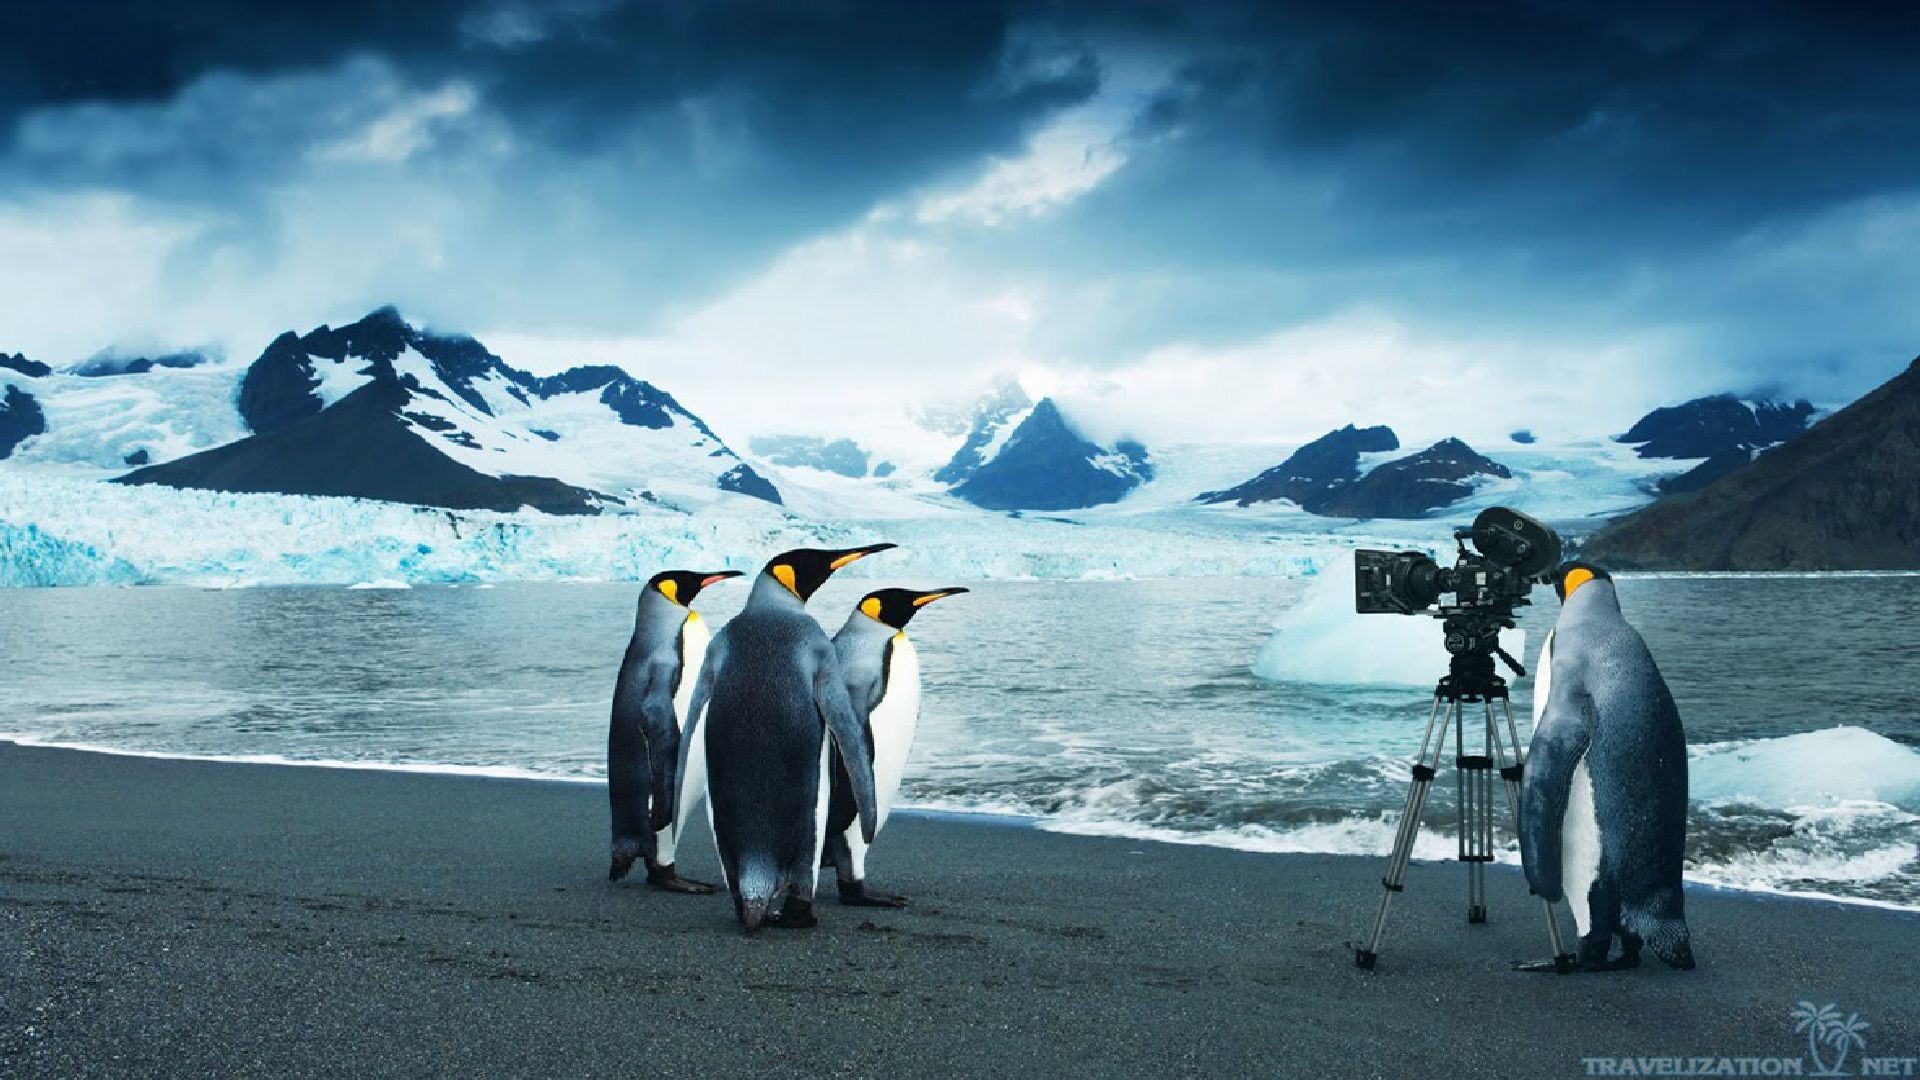 Moving Penguin Wallpaper Image